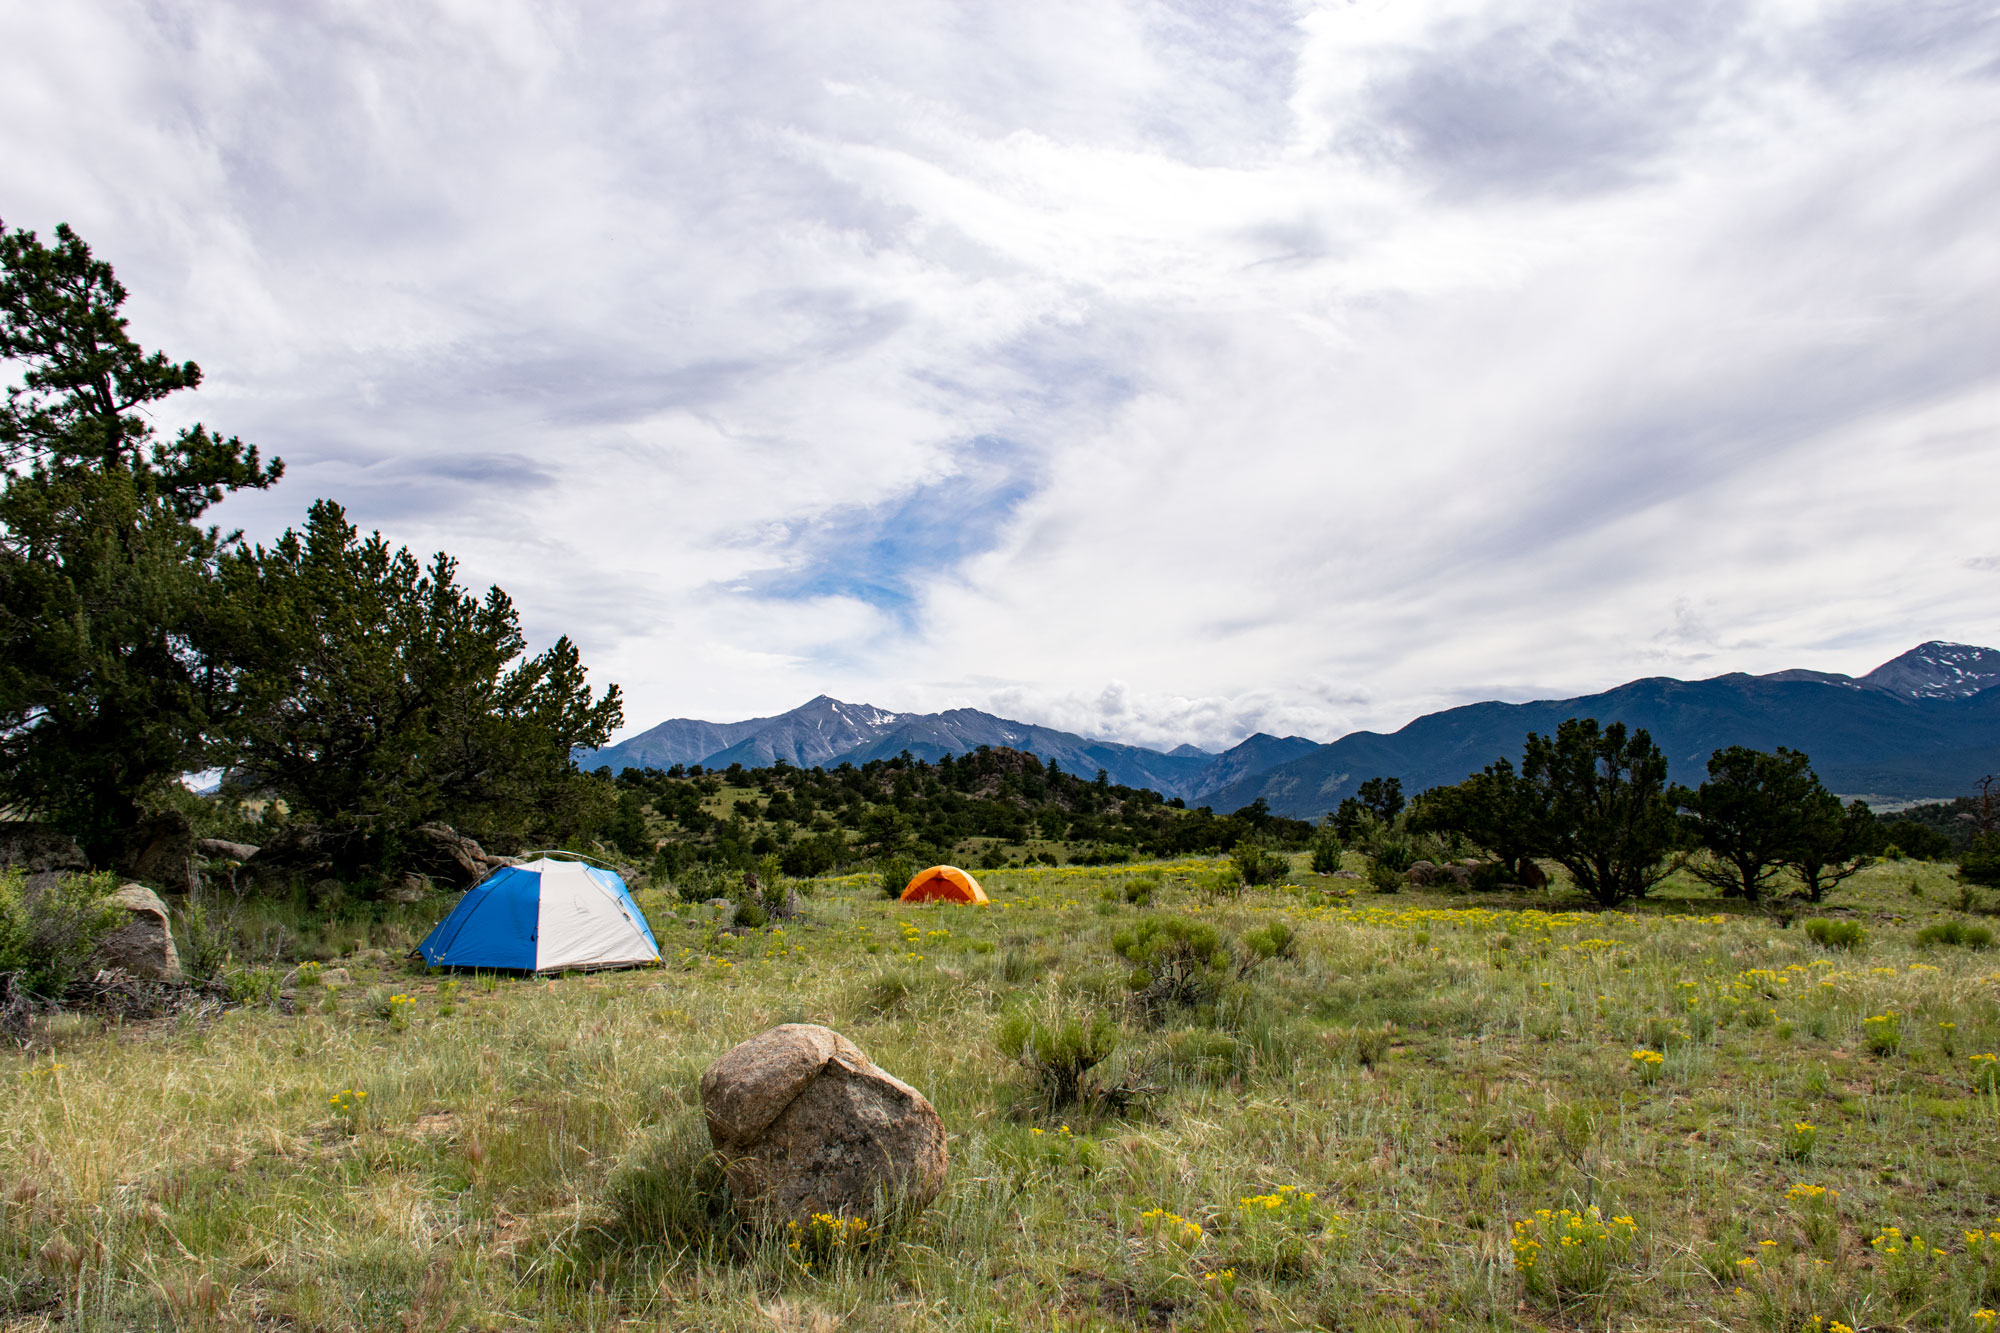 Camping Kit Rentals